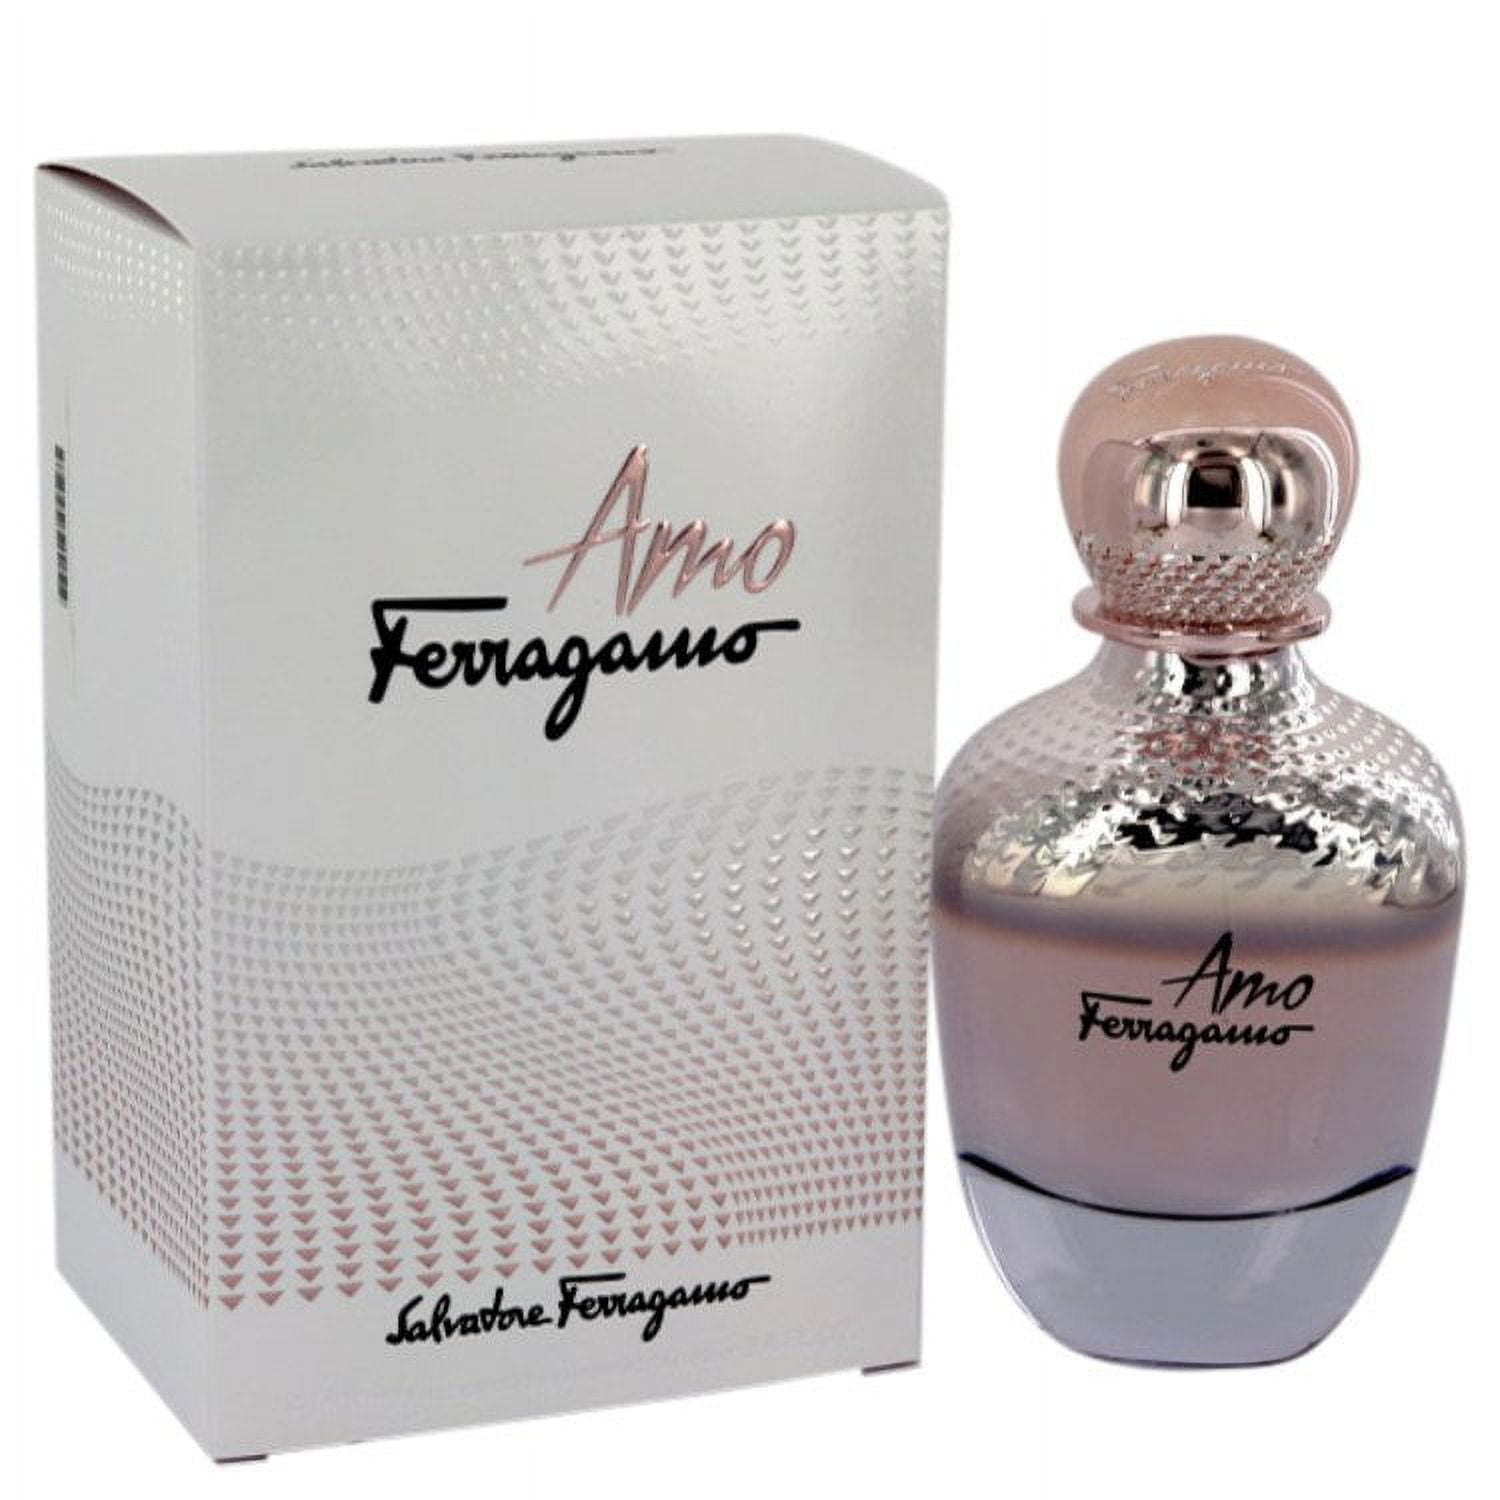 Amo Ferragamo by Salvatore Ferragamo Eau De Parfum Spray 3.4 oz For Women | Eau de Parfum